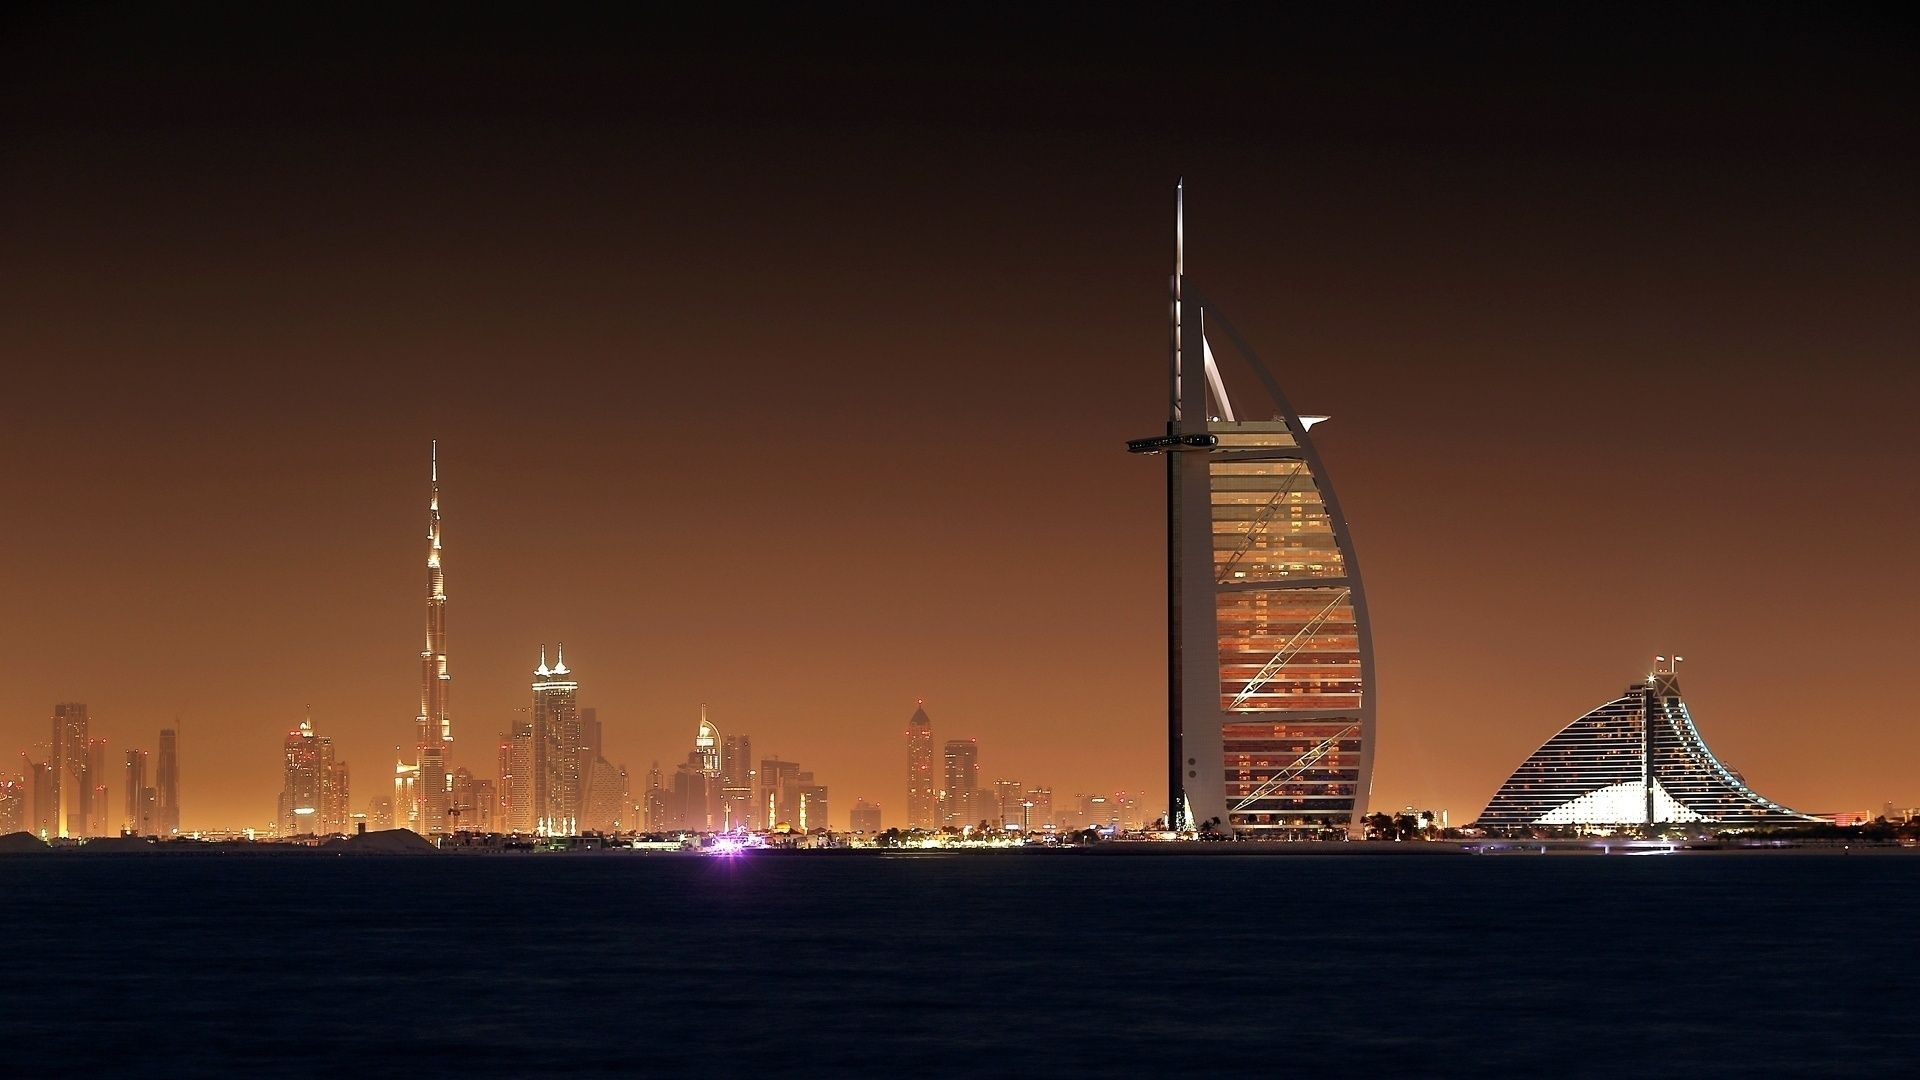 Burj al Arab Hotel, Dubai luxury, Iconic sail-shaped structure, Exquisite design, 1920x1080 Full HD Desktop